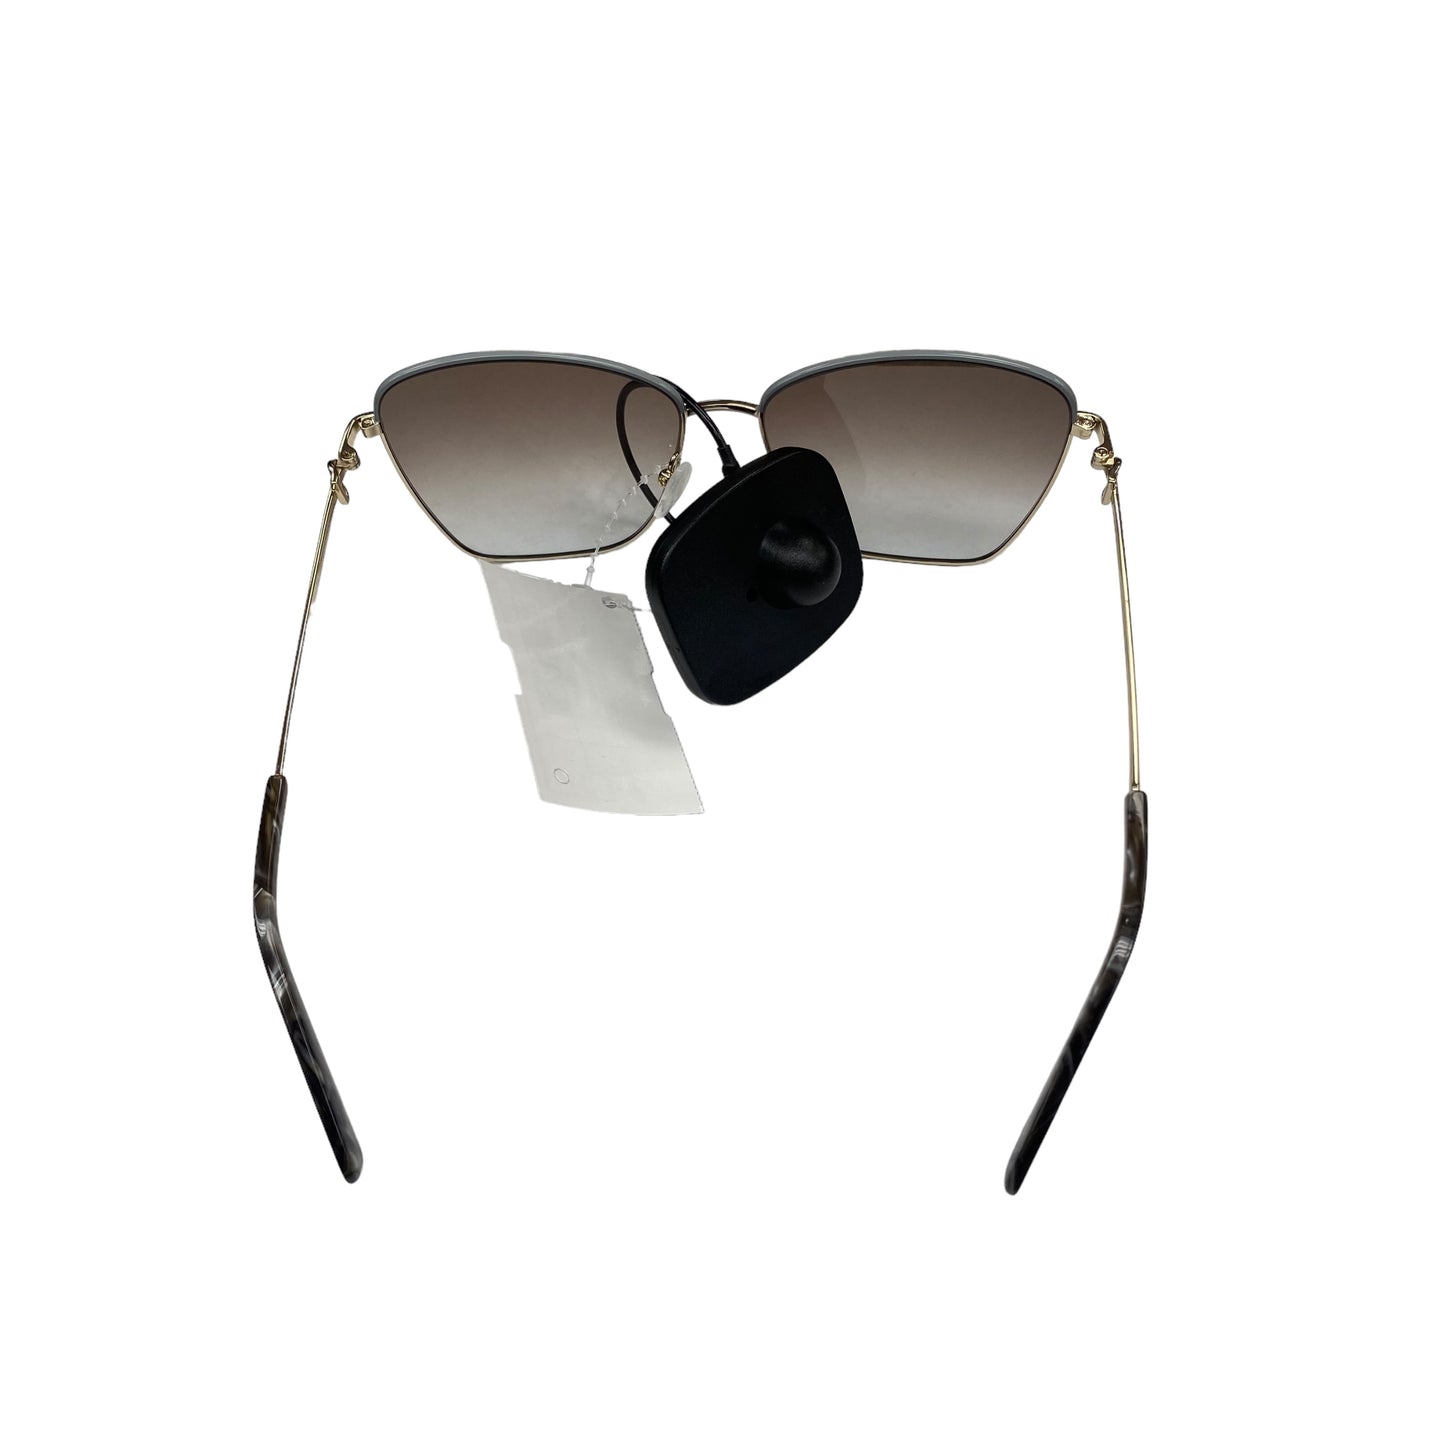 Sunglasses Designer By Longchamp